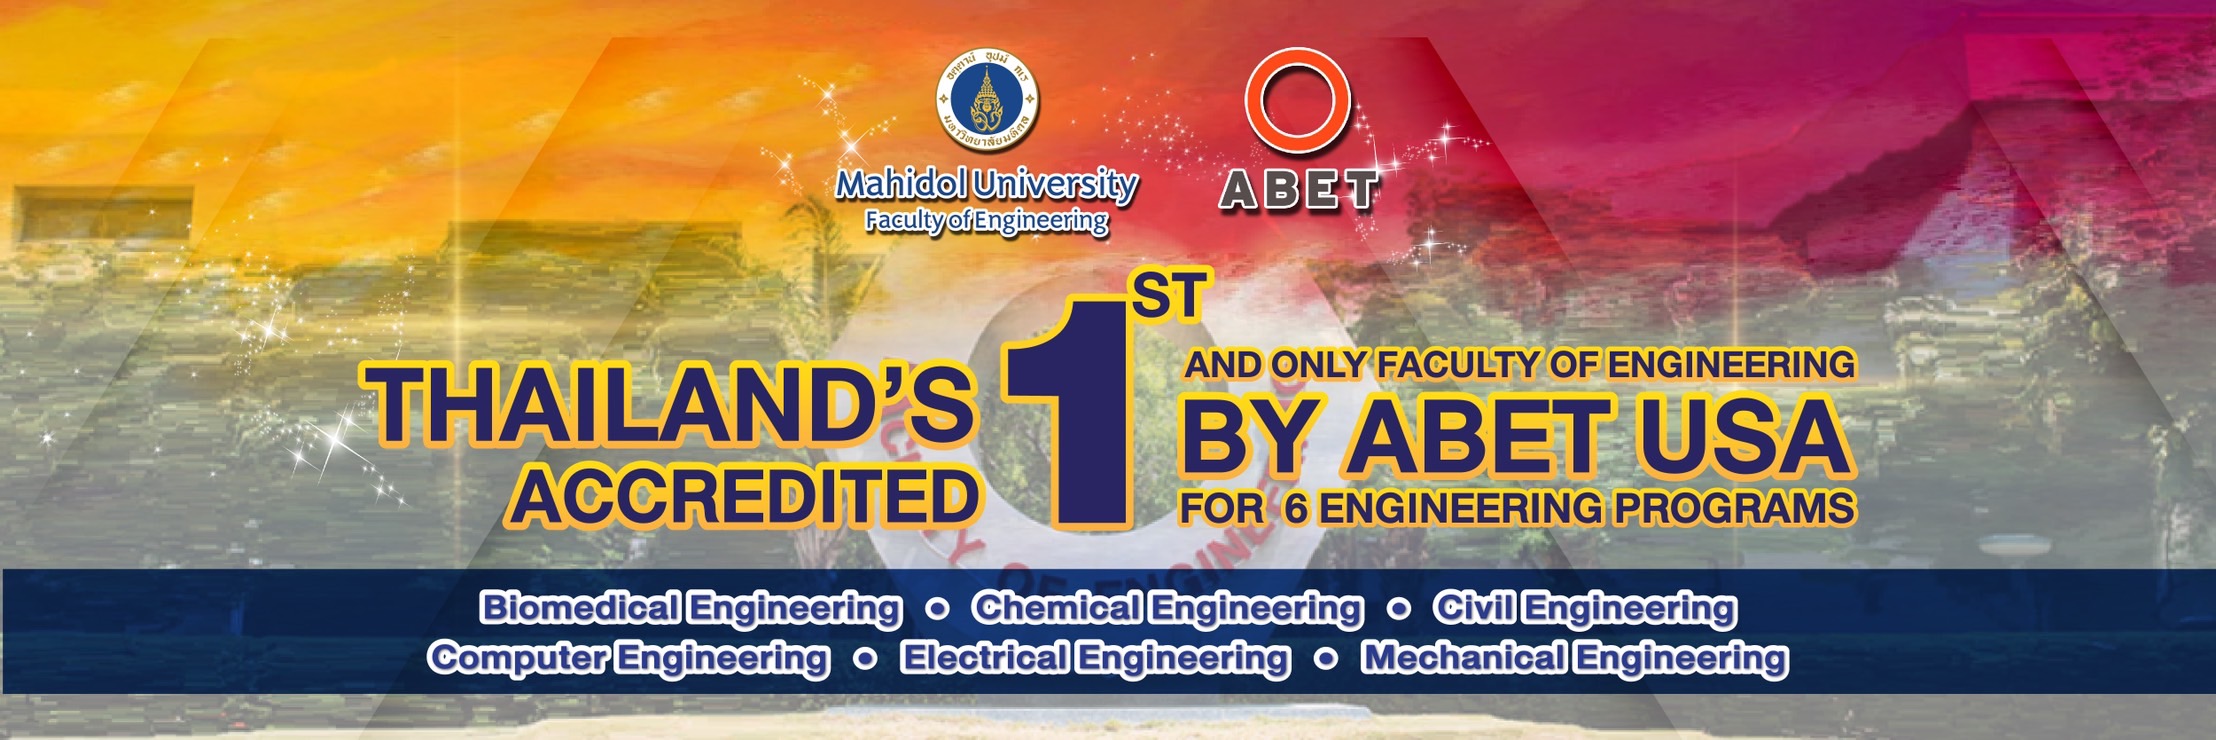 Mahidol Engineering, ABET Accreditated in Thailand